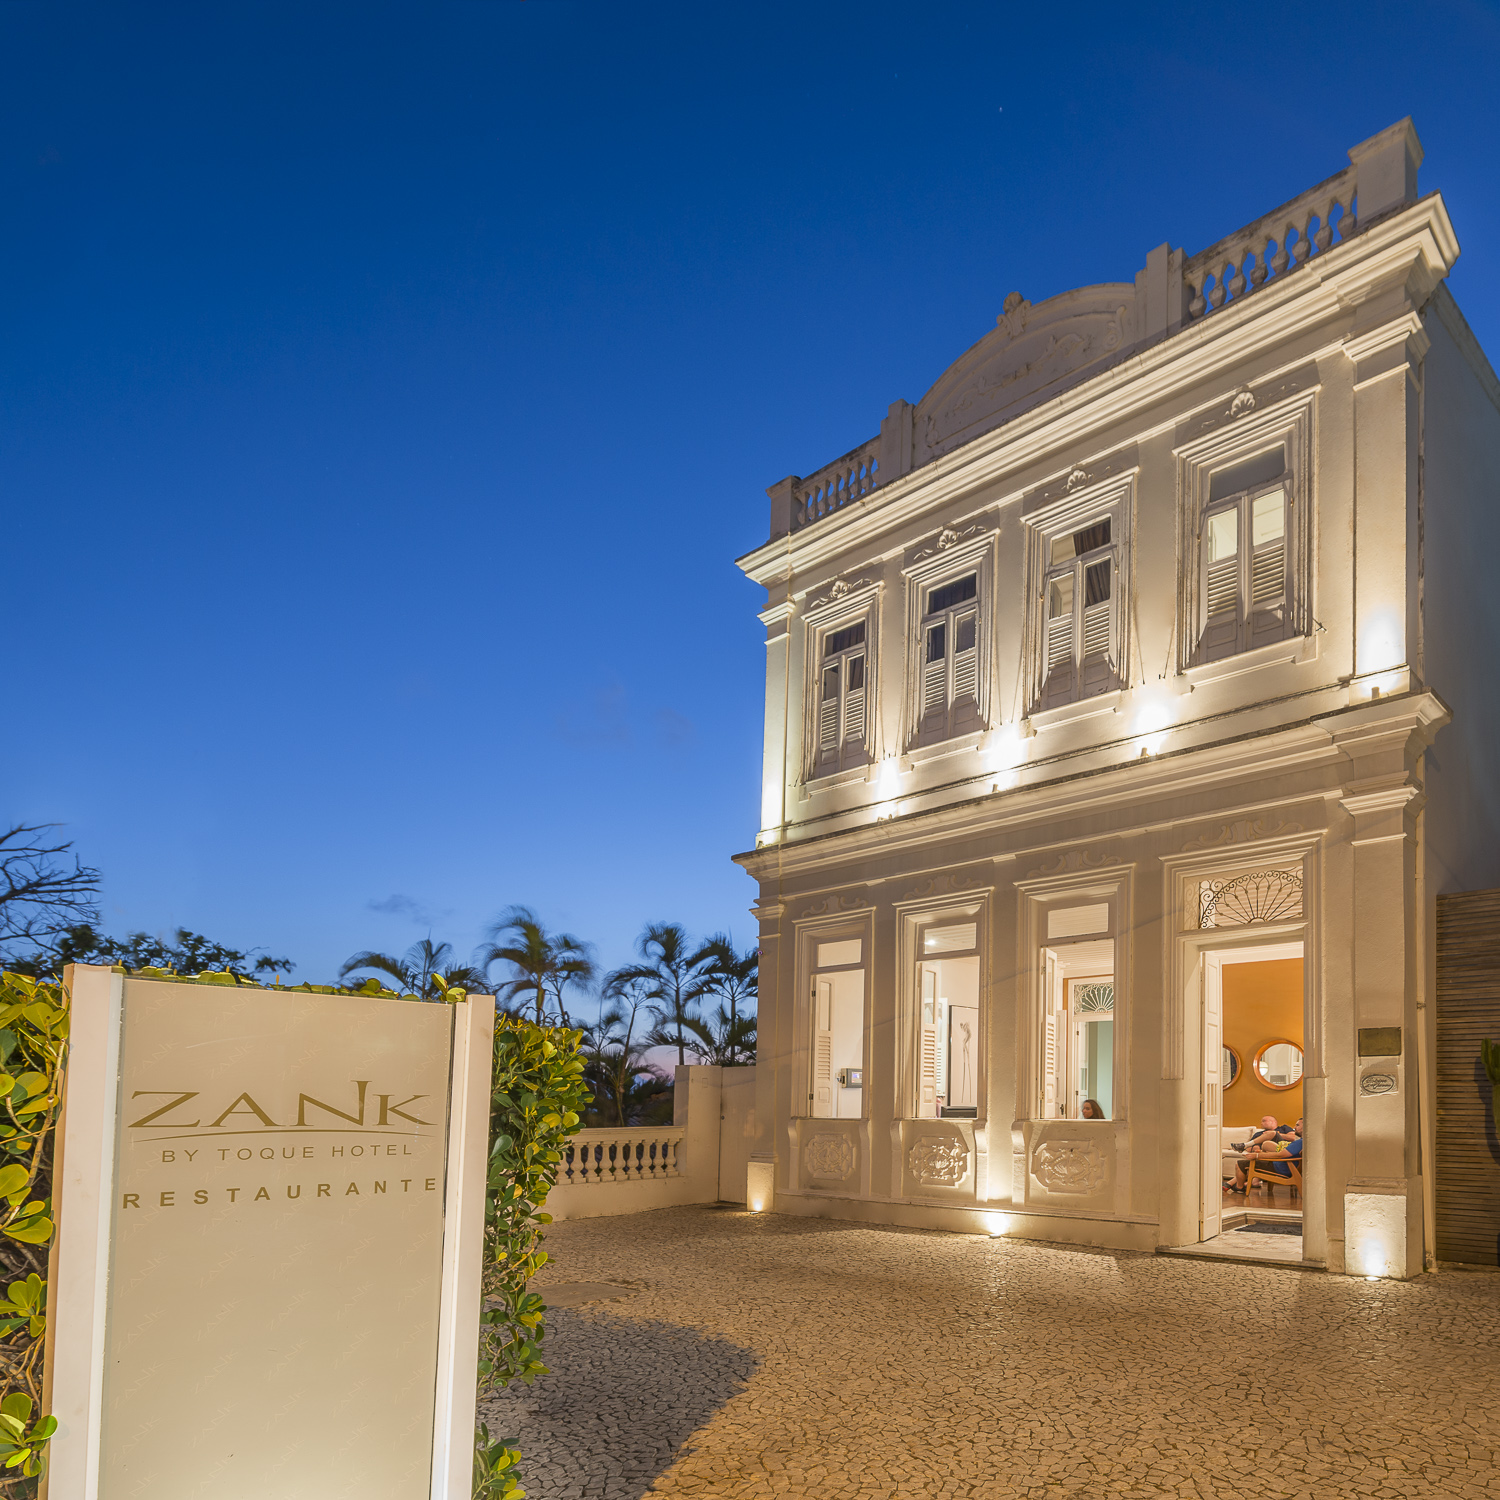 Zank by Toque Hotel, Salvador-BA, Brasil